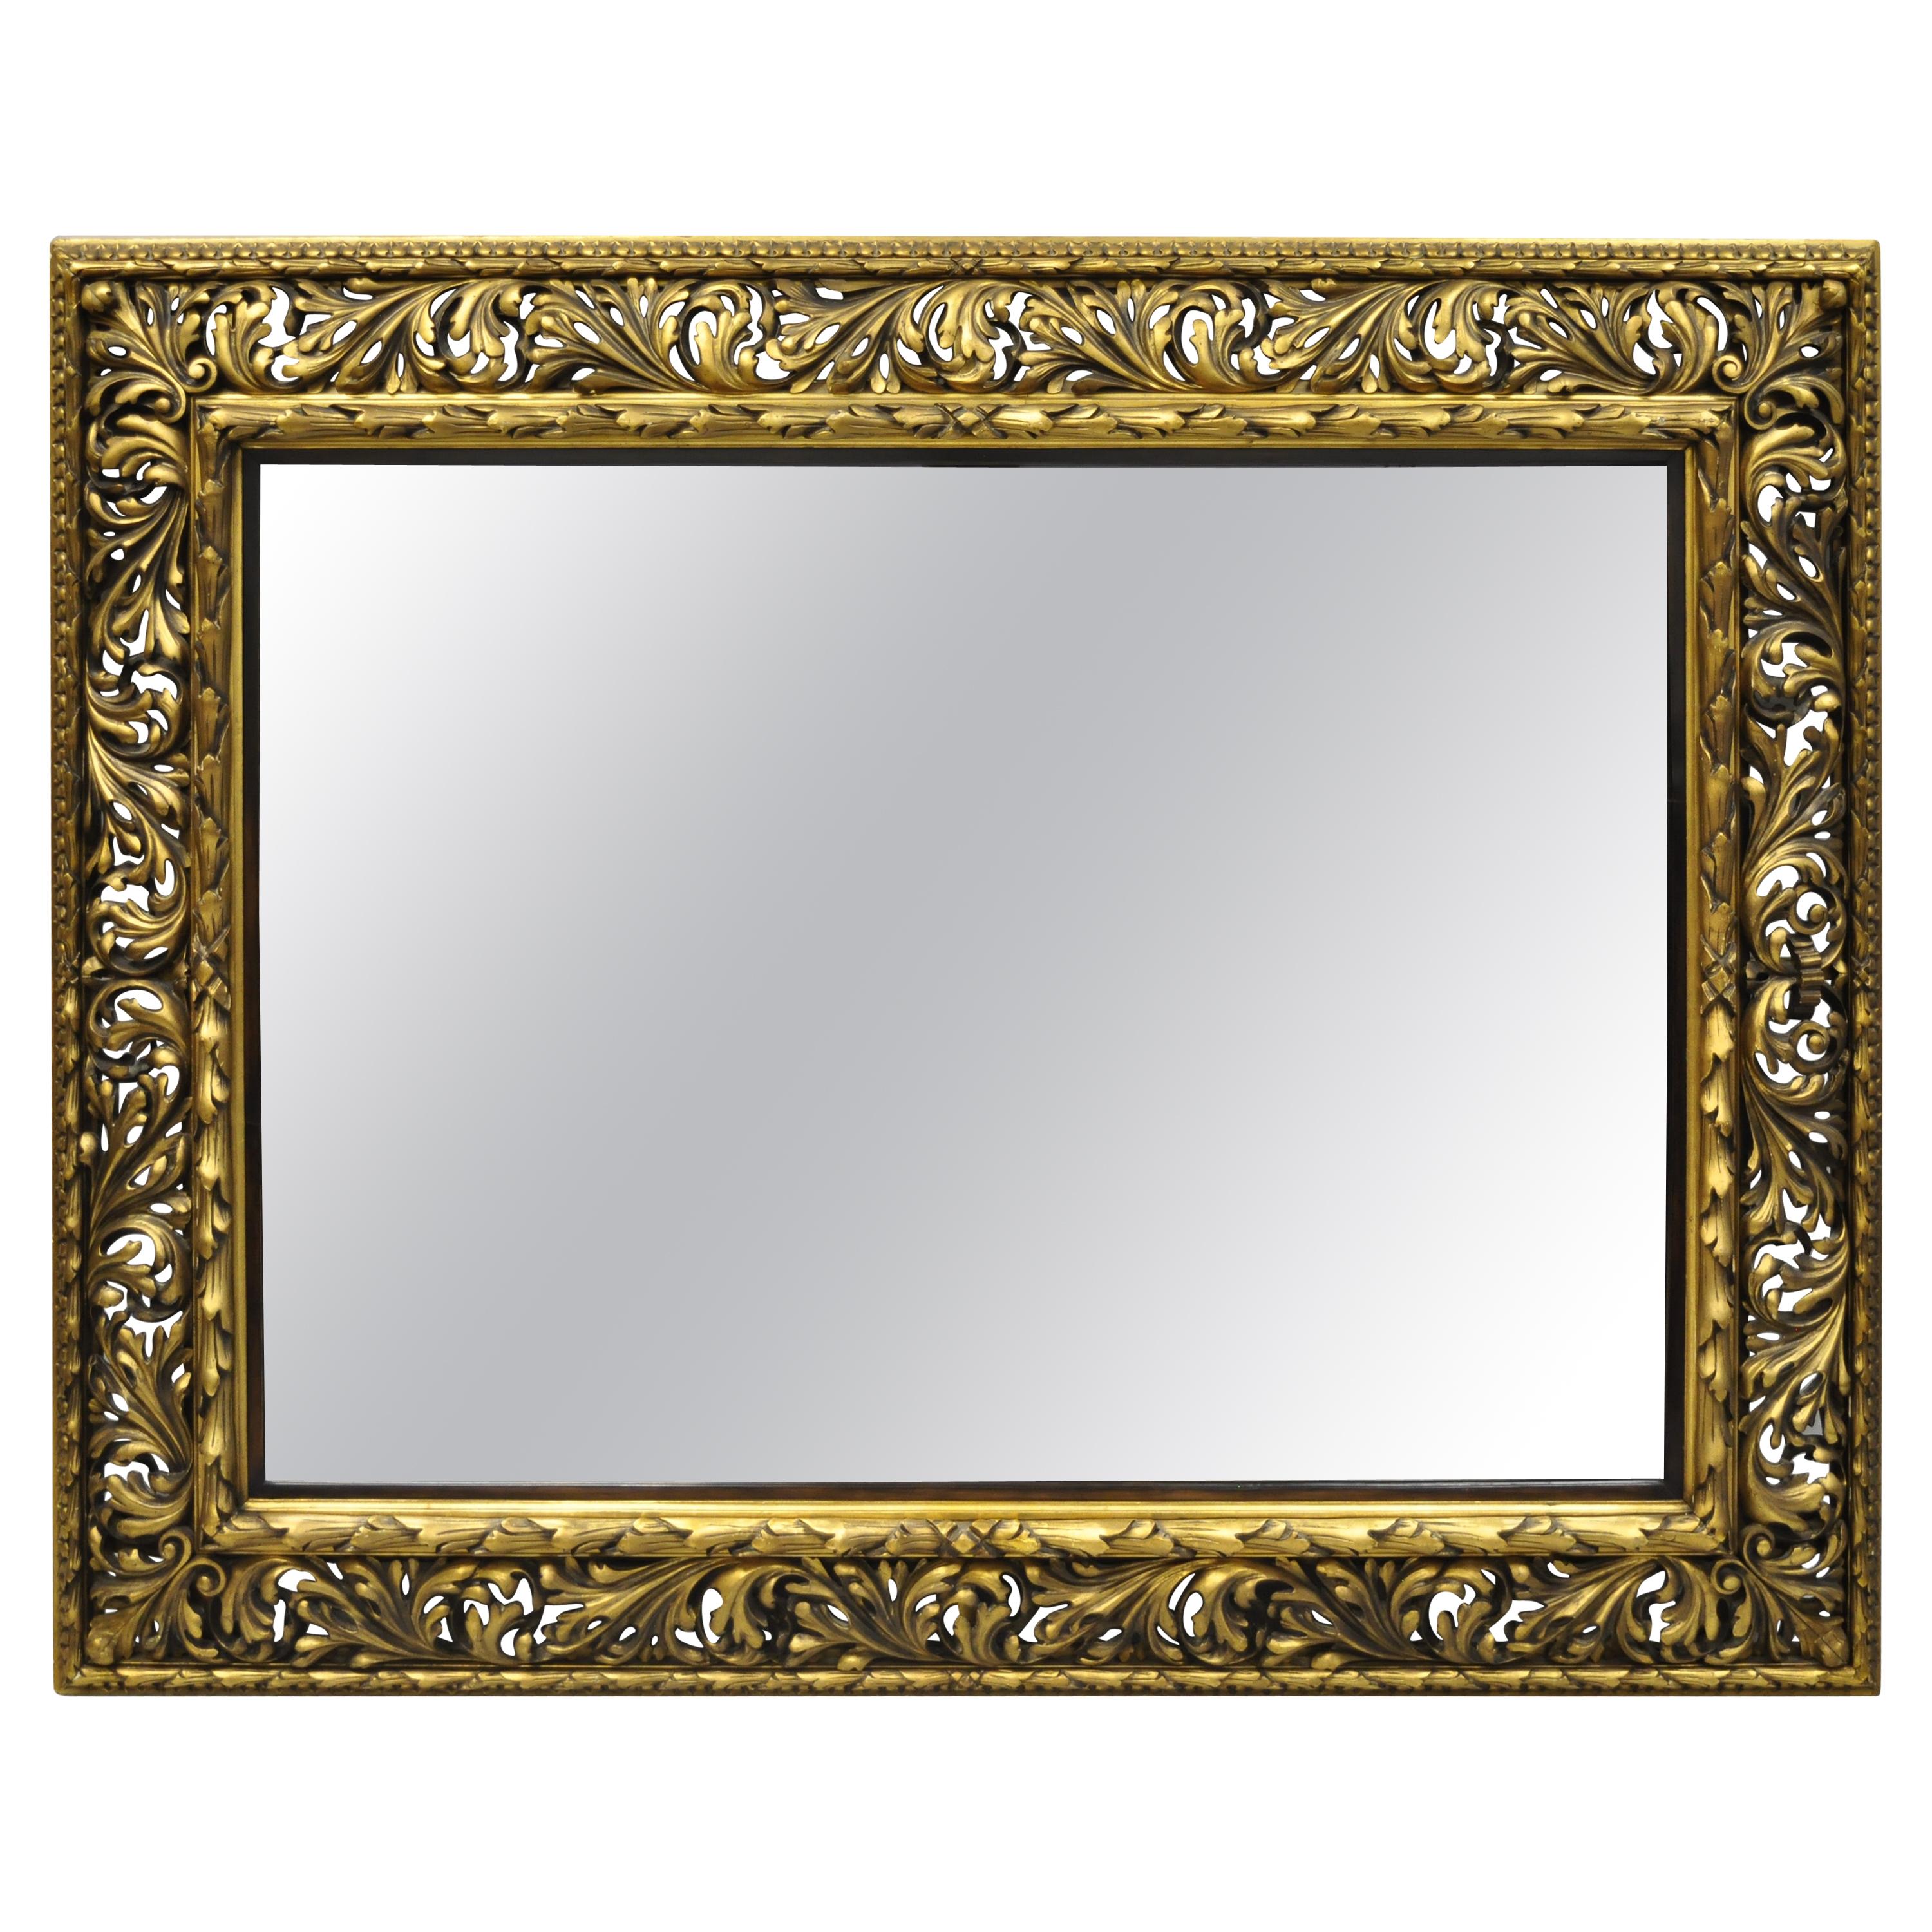 Ancien miroir baroque français de style rococo en bois sculpté et grand miroir doré